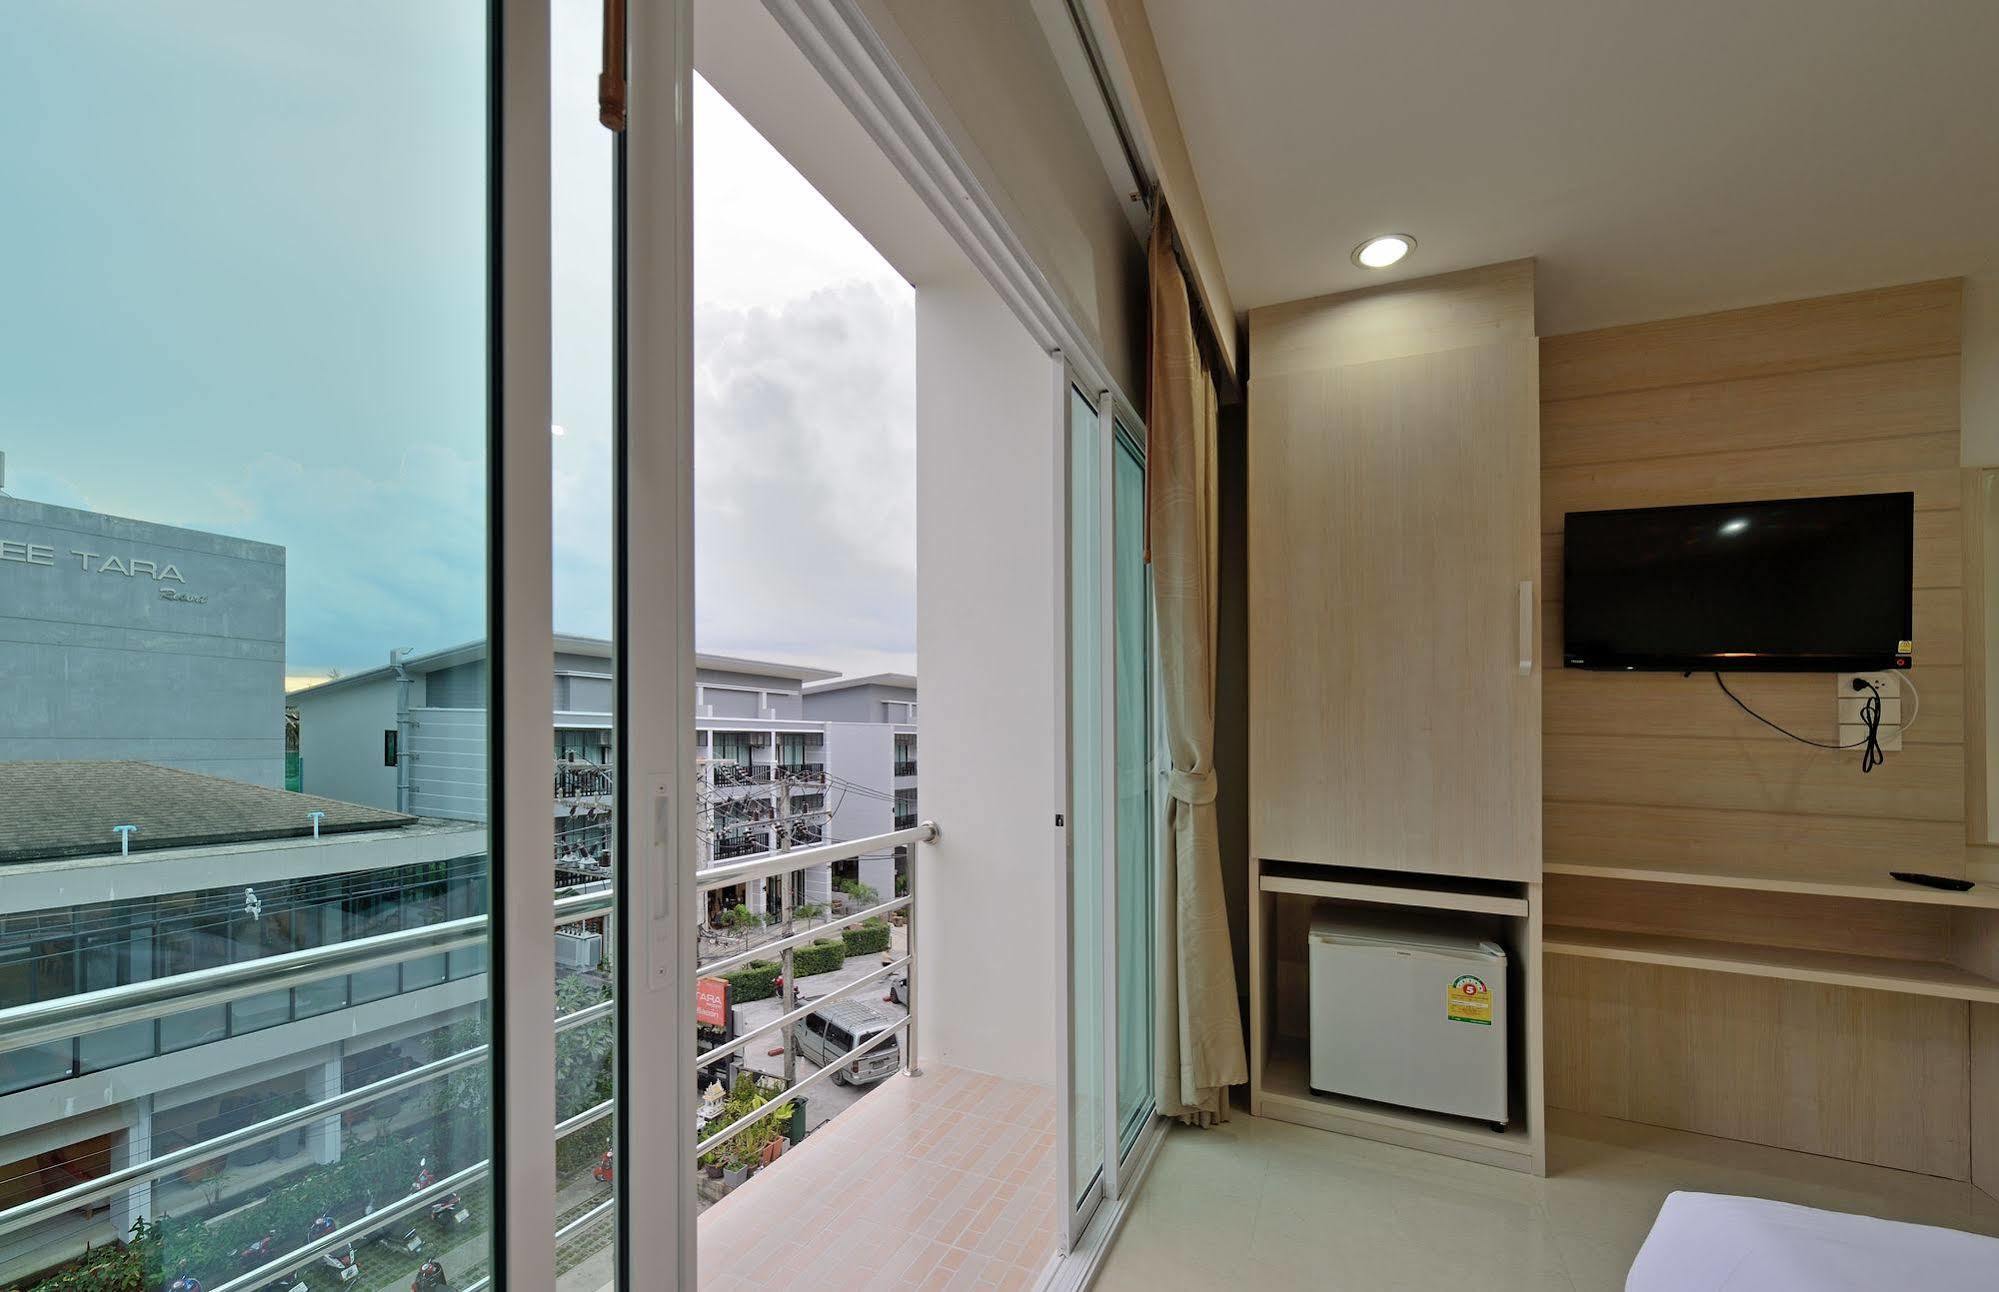 Baan Kure Ngern Aonang Apartment Ao Nang Exterior photo